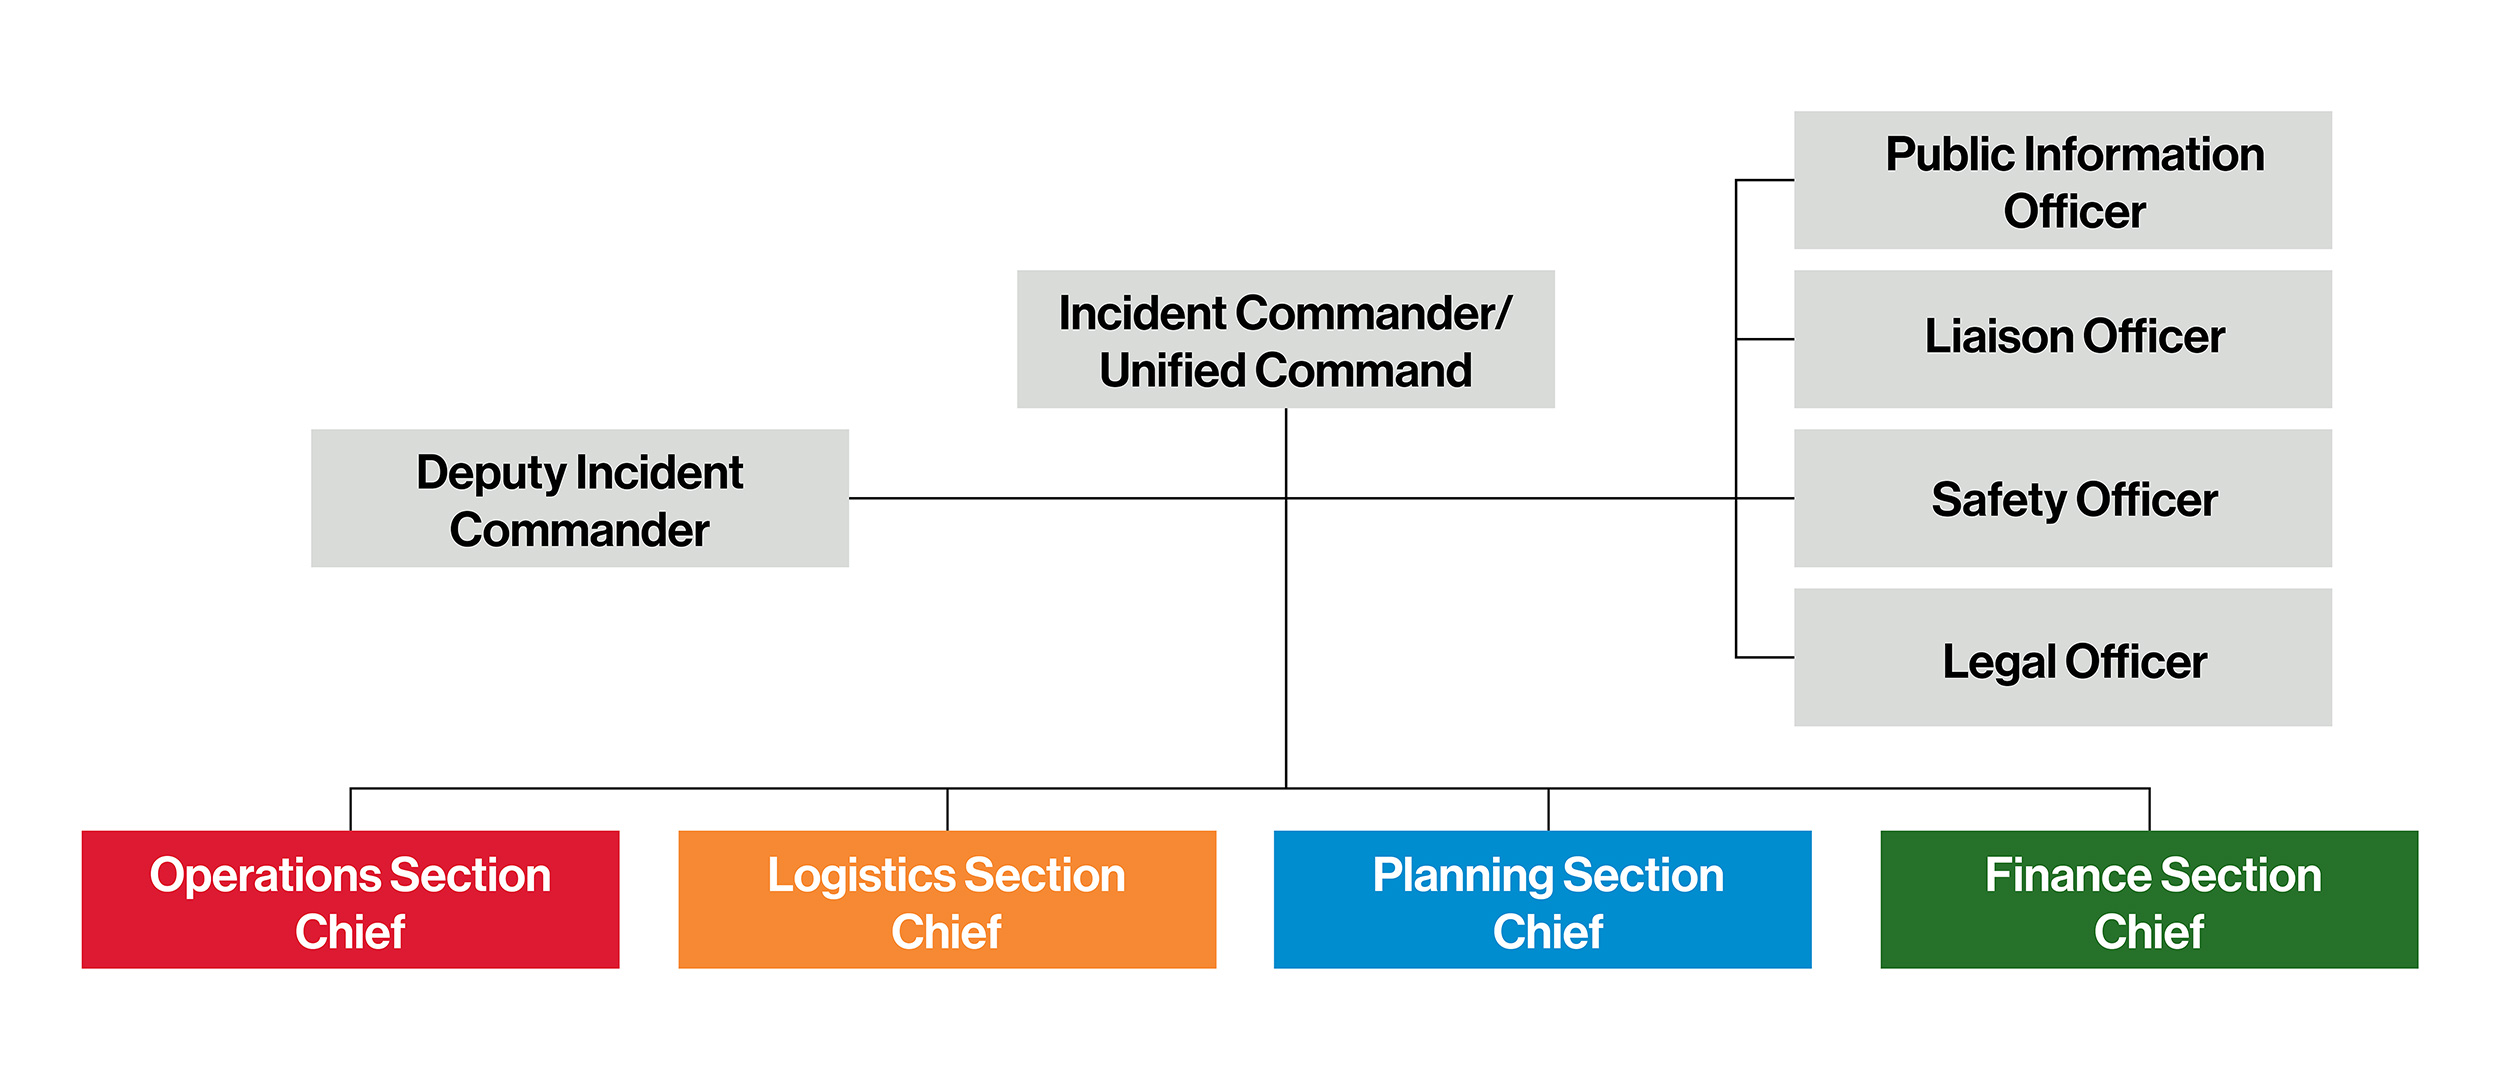 Ics Organizational Chart Showing Incident Commander Public Information